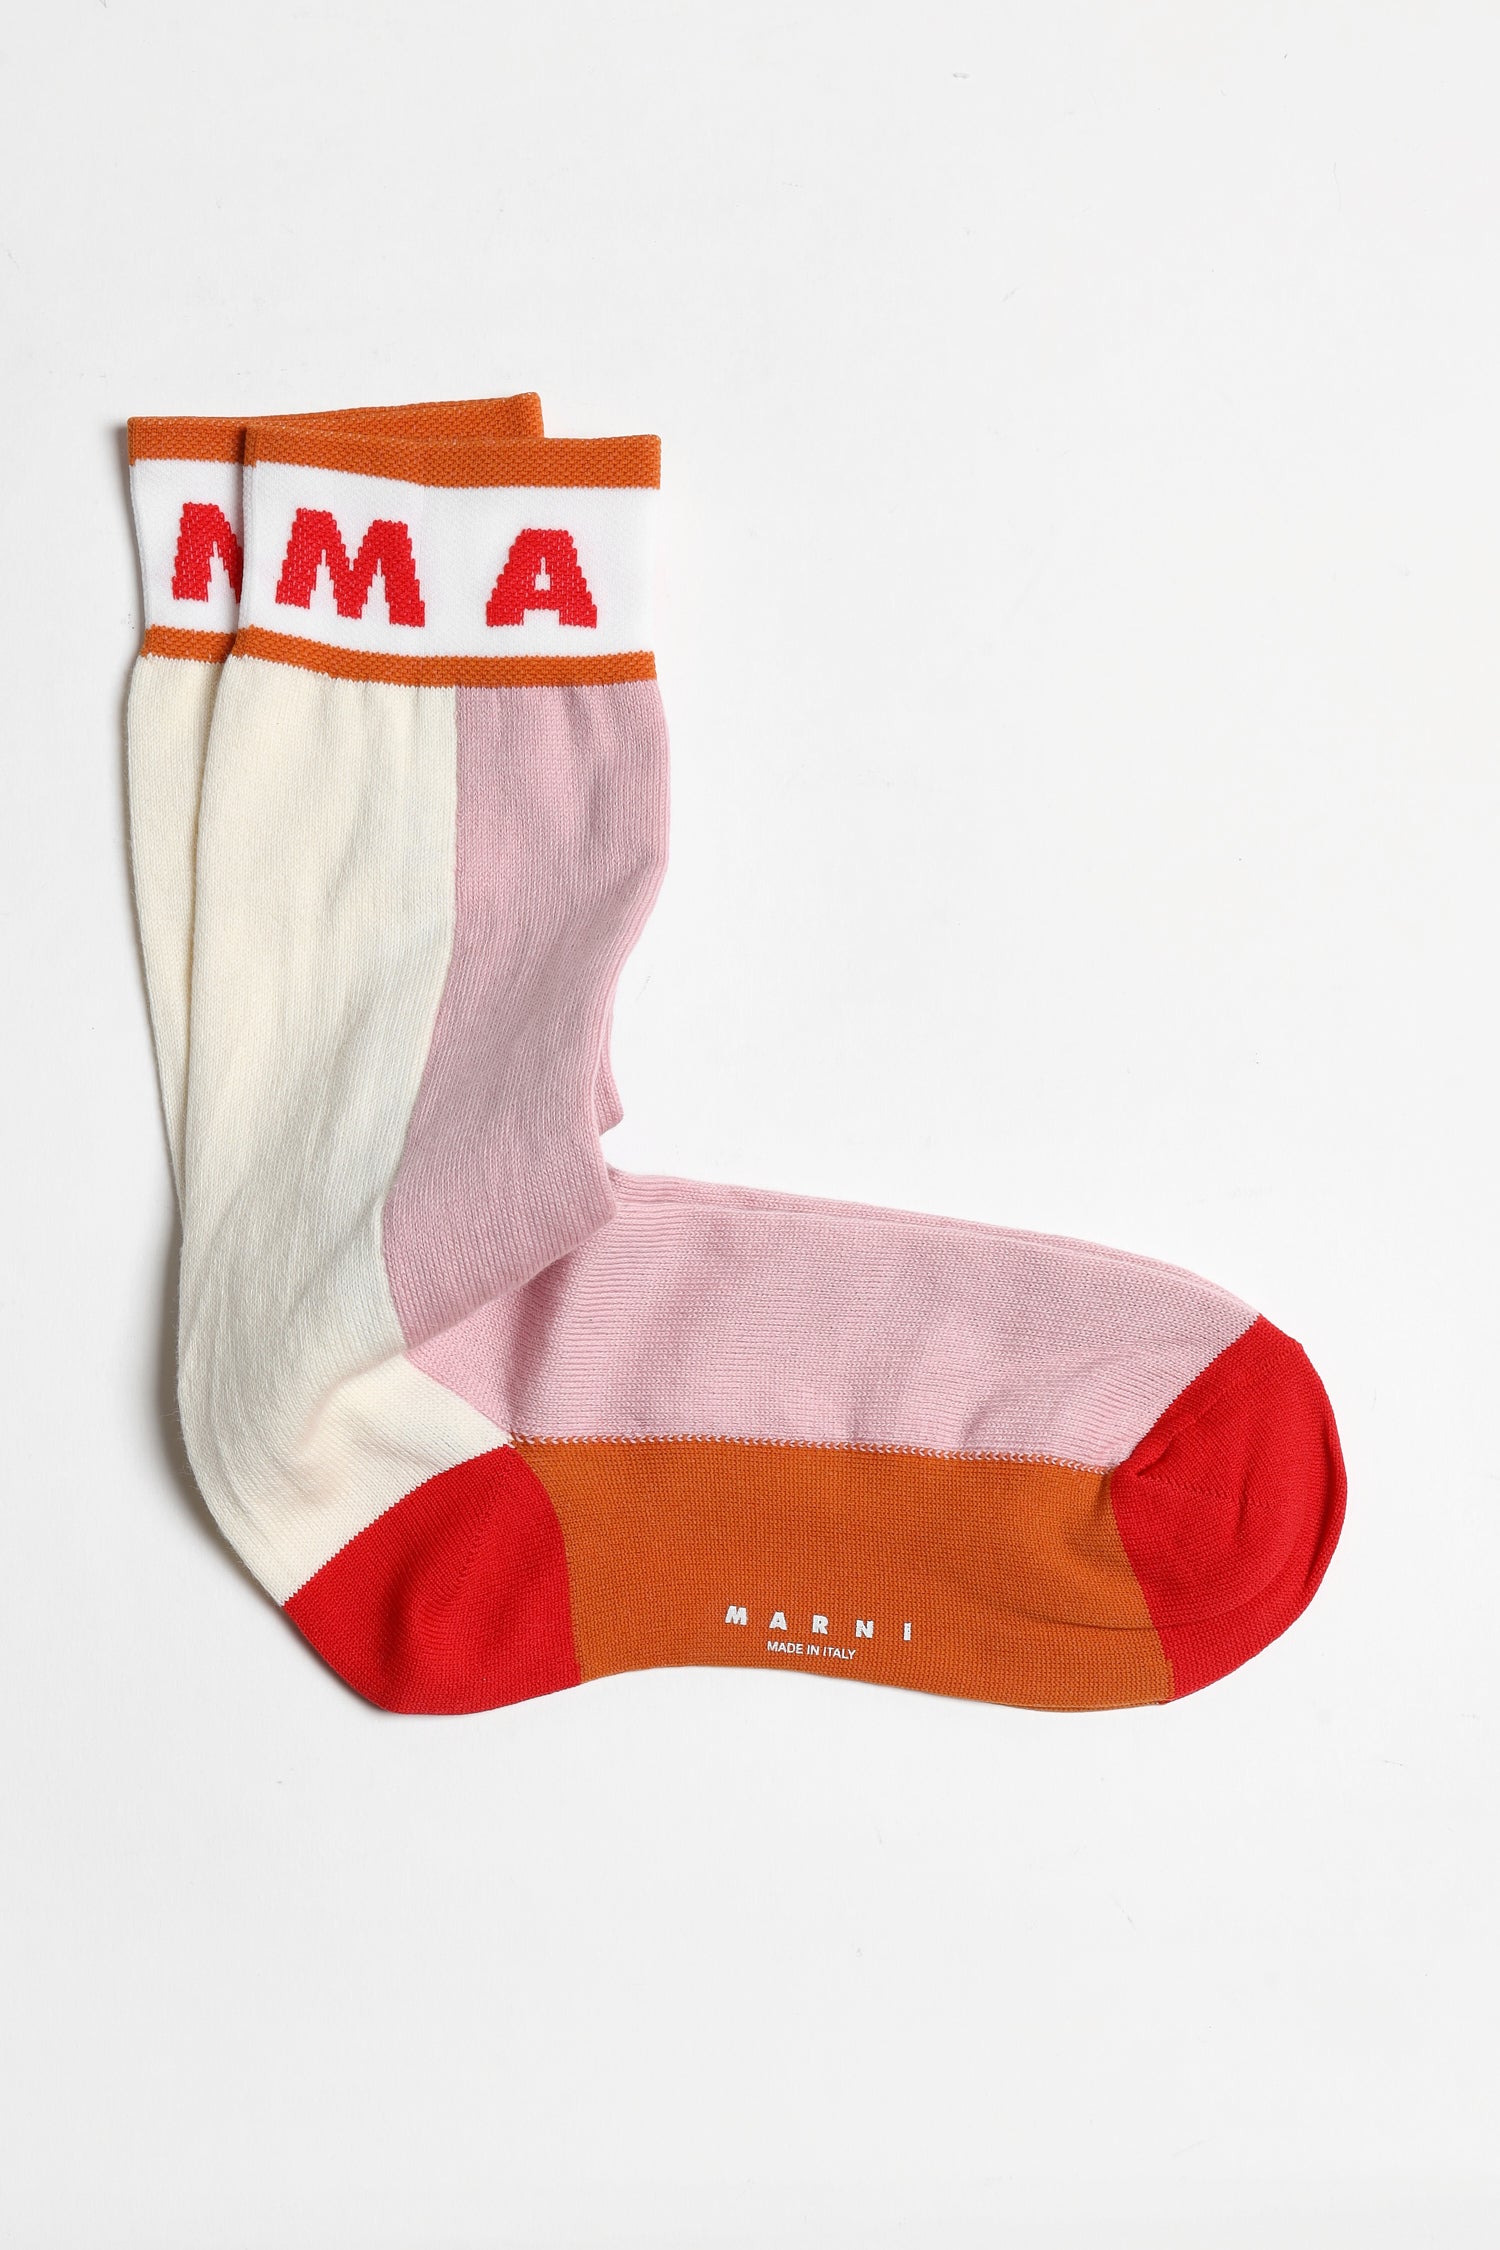 Socken Colorblock in DahliaMarni - Anita Hass